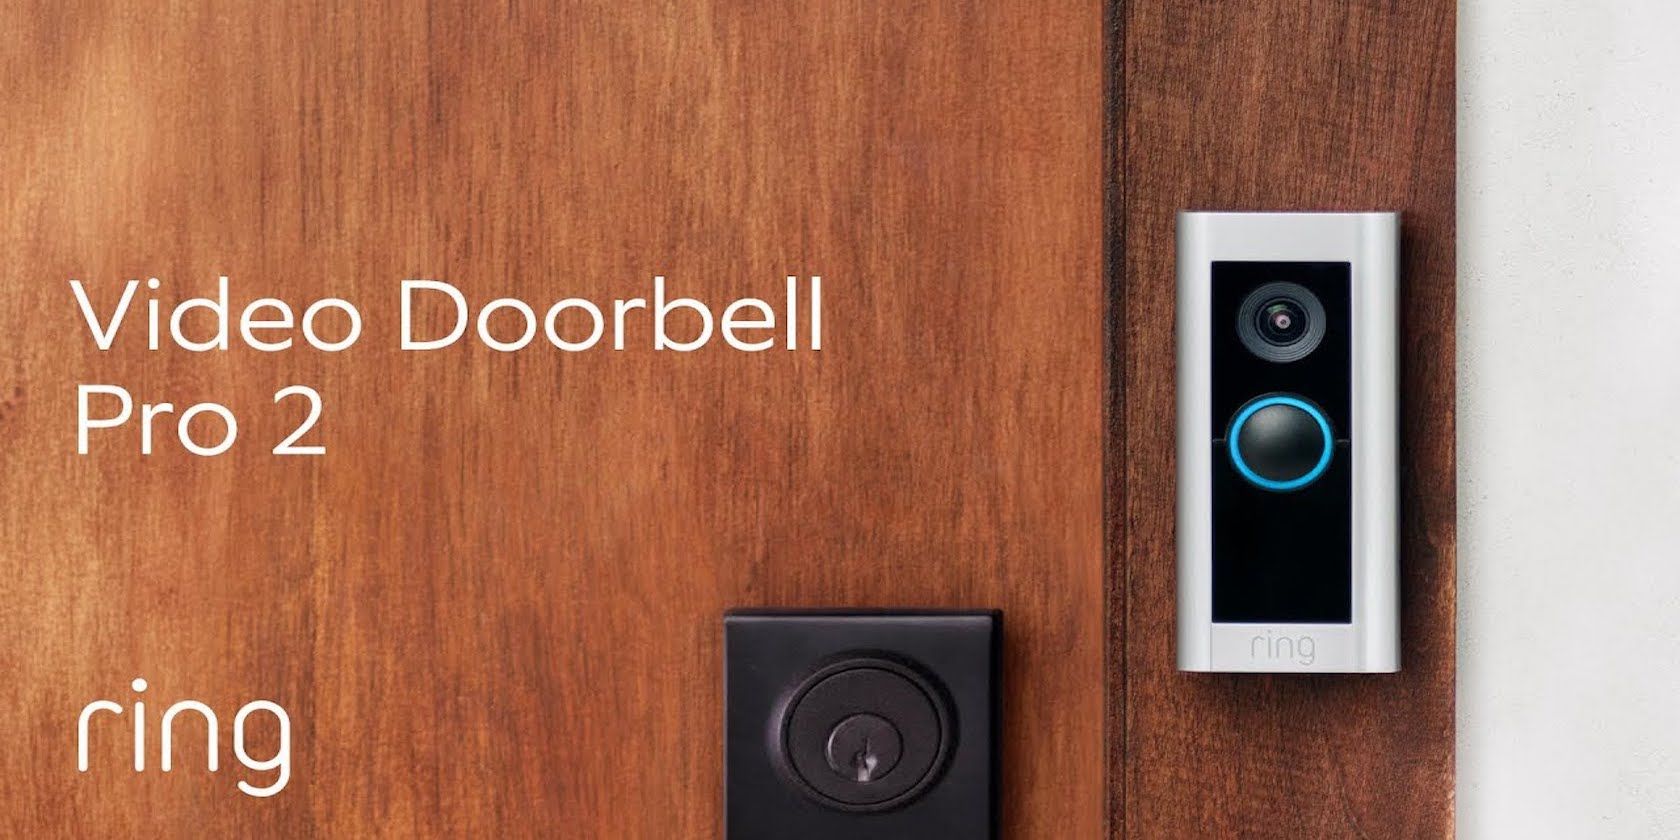 Ring Video Doorbell Pro 2 image from Ring press center